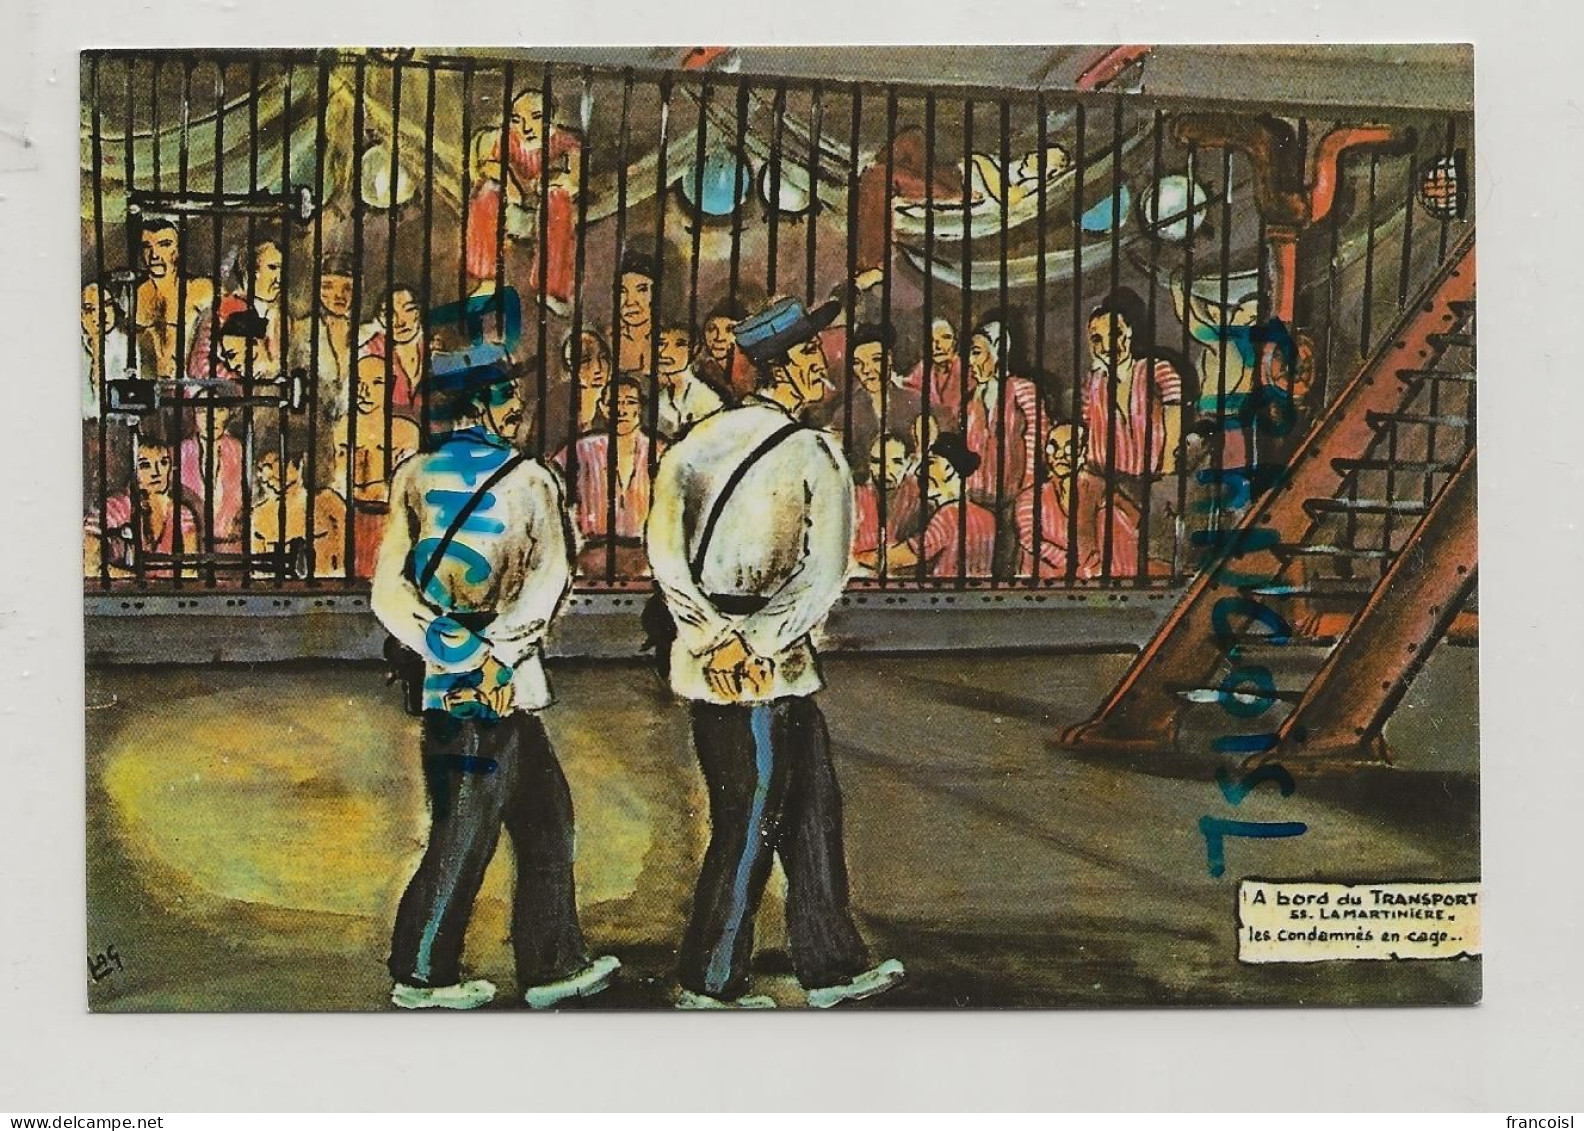 Guyane Française. Oeuvre Du Peintre "Forçat" Lagrange. "A Bord Du Transport Ss "La Martinière" - Gevangenis